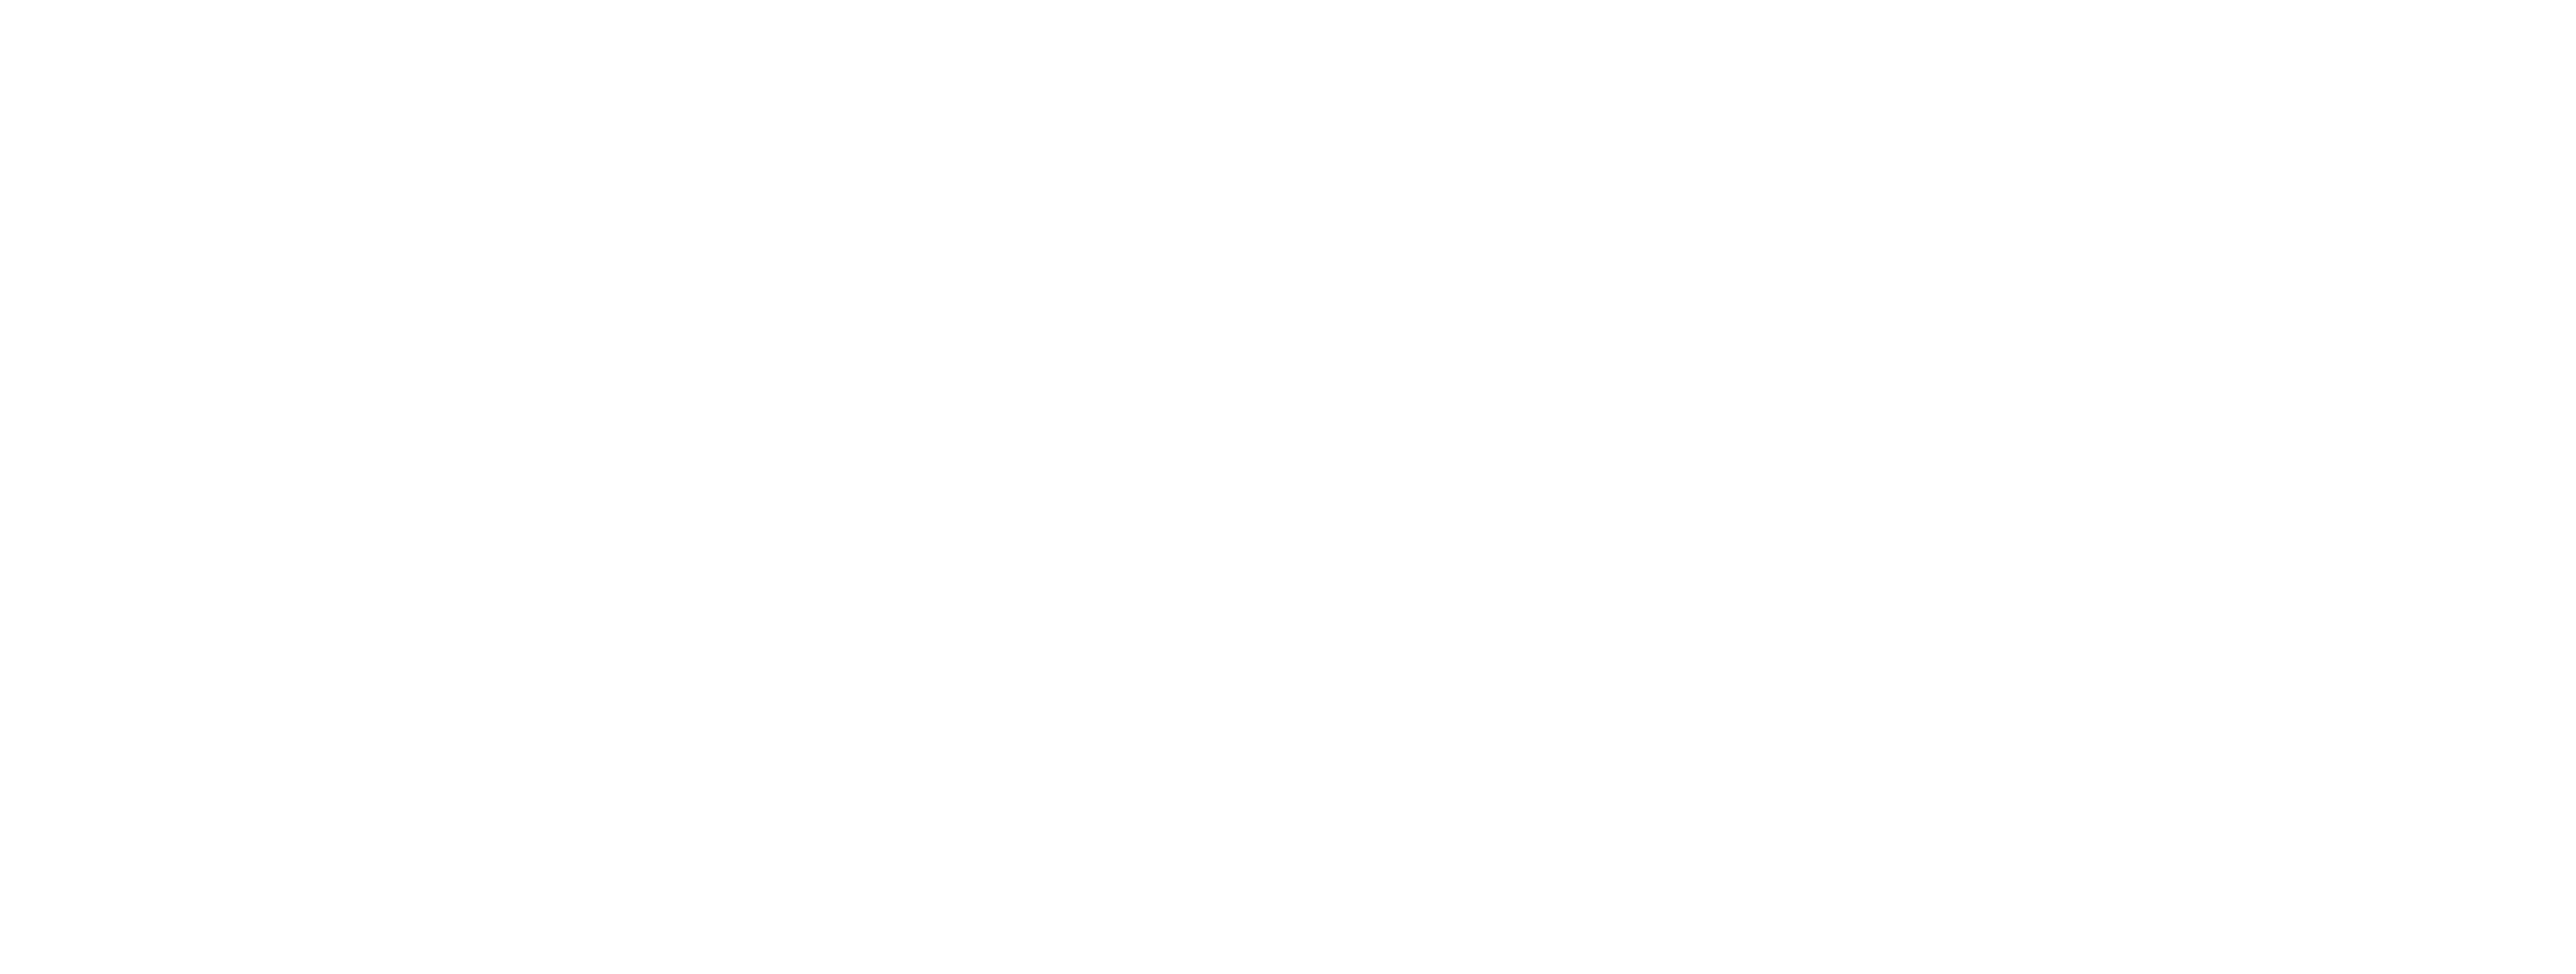 Veterans Development Corporation